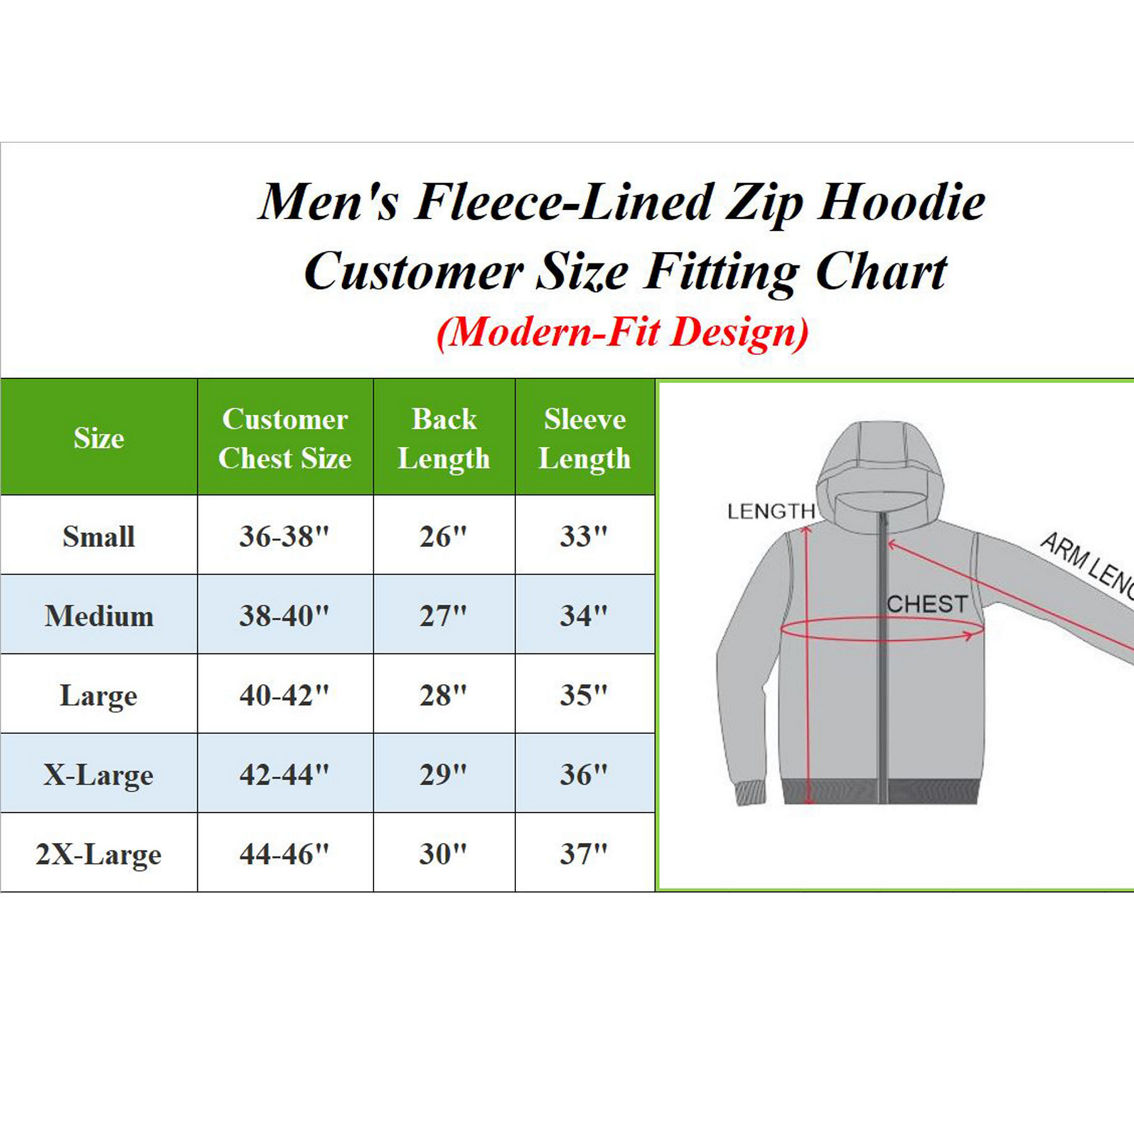 Blue Ice Men’s Fleece-Lined Full-Zip Hoodie-2 Pack - Image 2 of 2